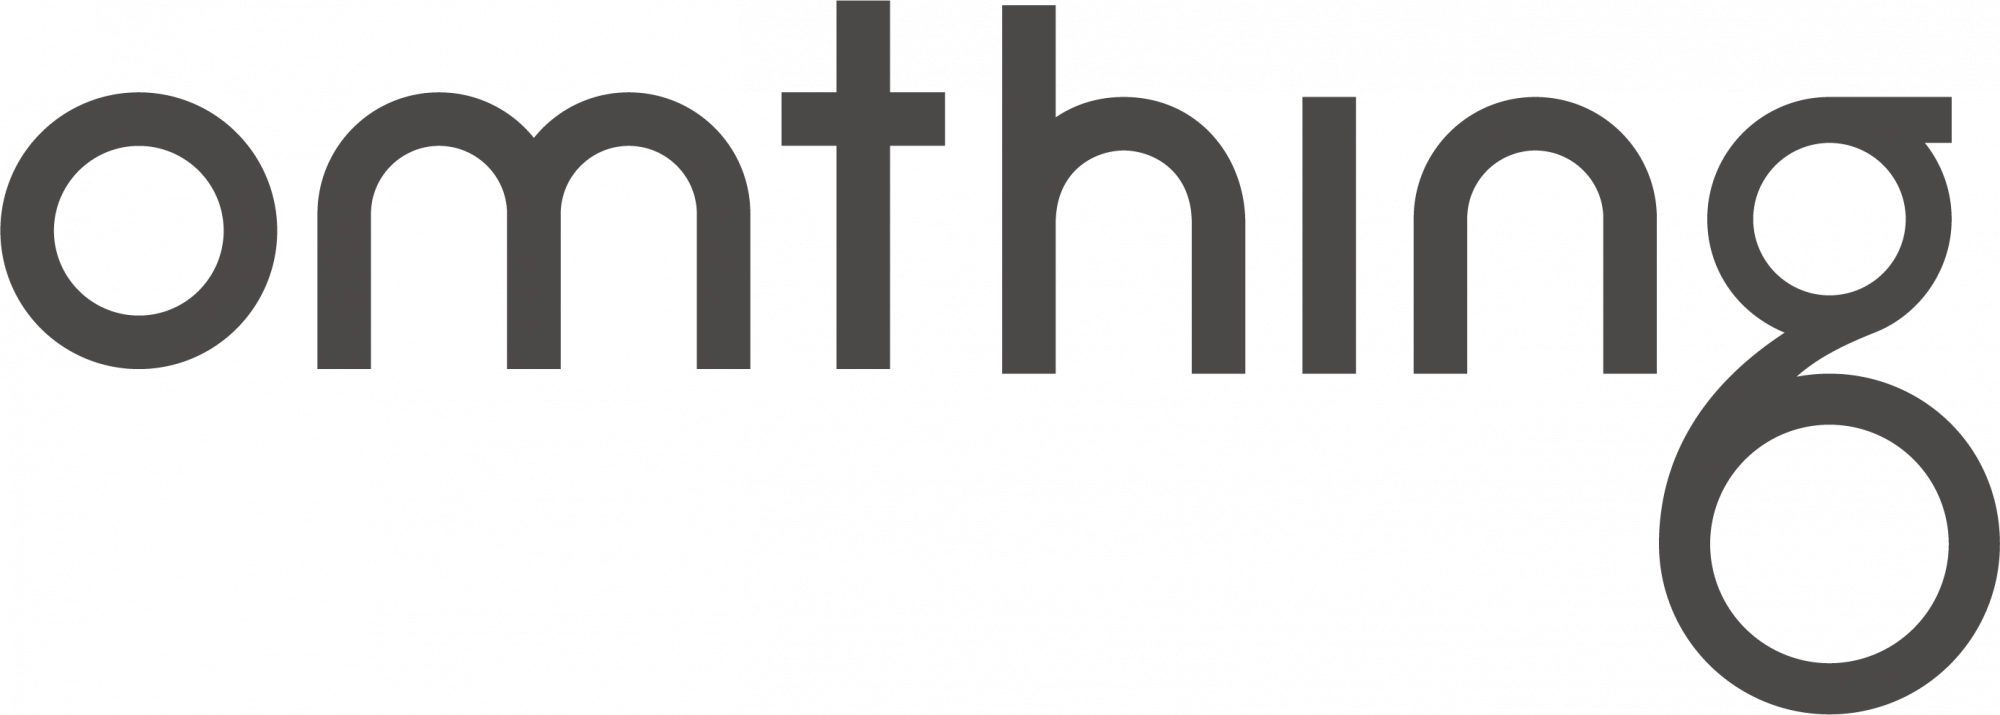 Omthing – логотип, купить Omthing в Минске недорого с доставкой по Беларуси – 360shop.by